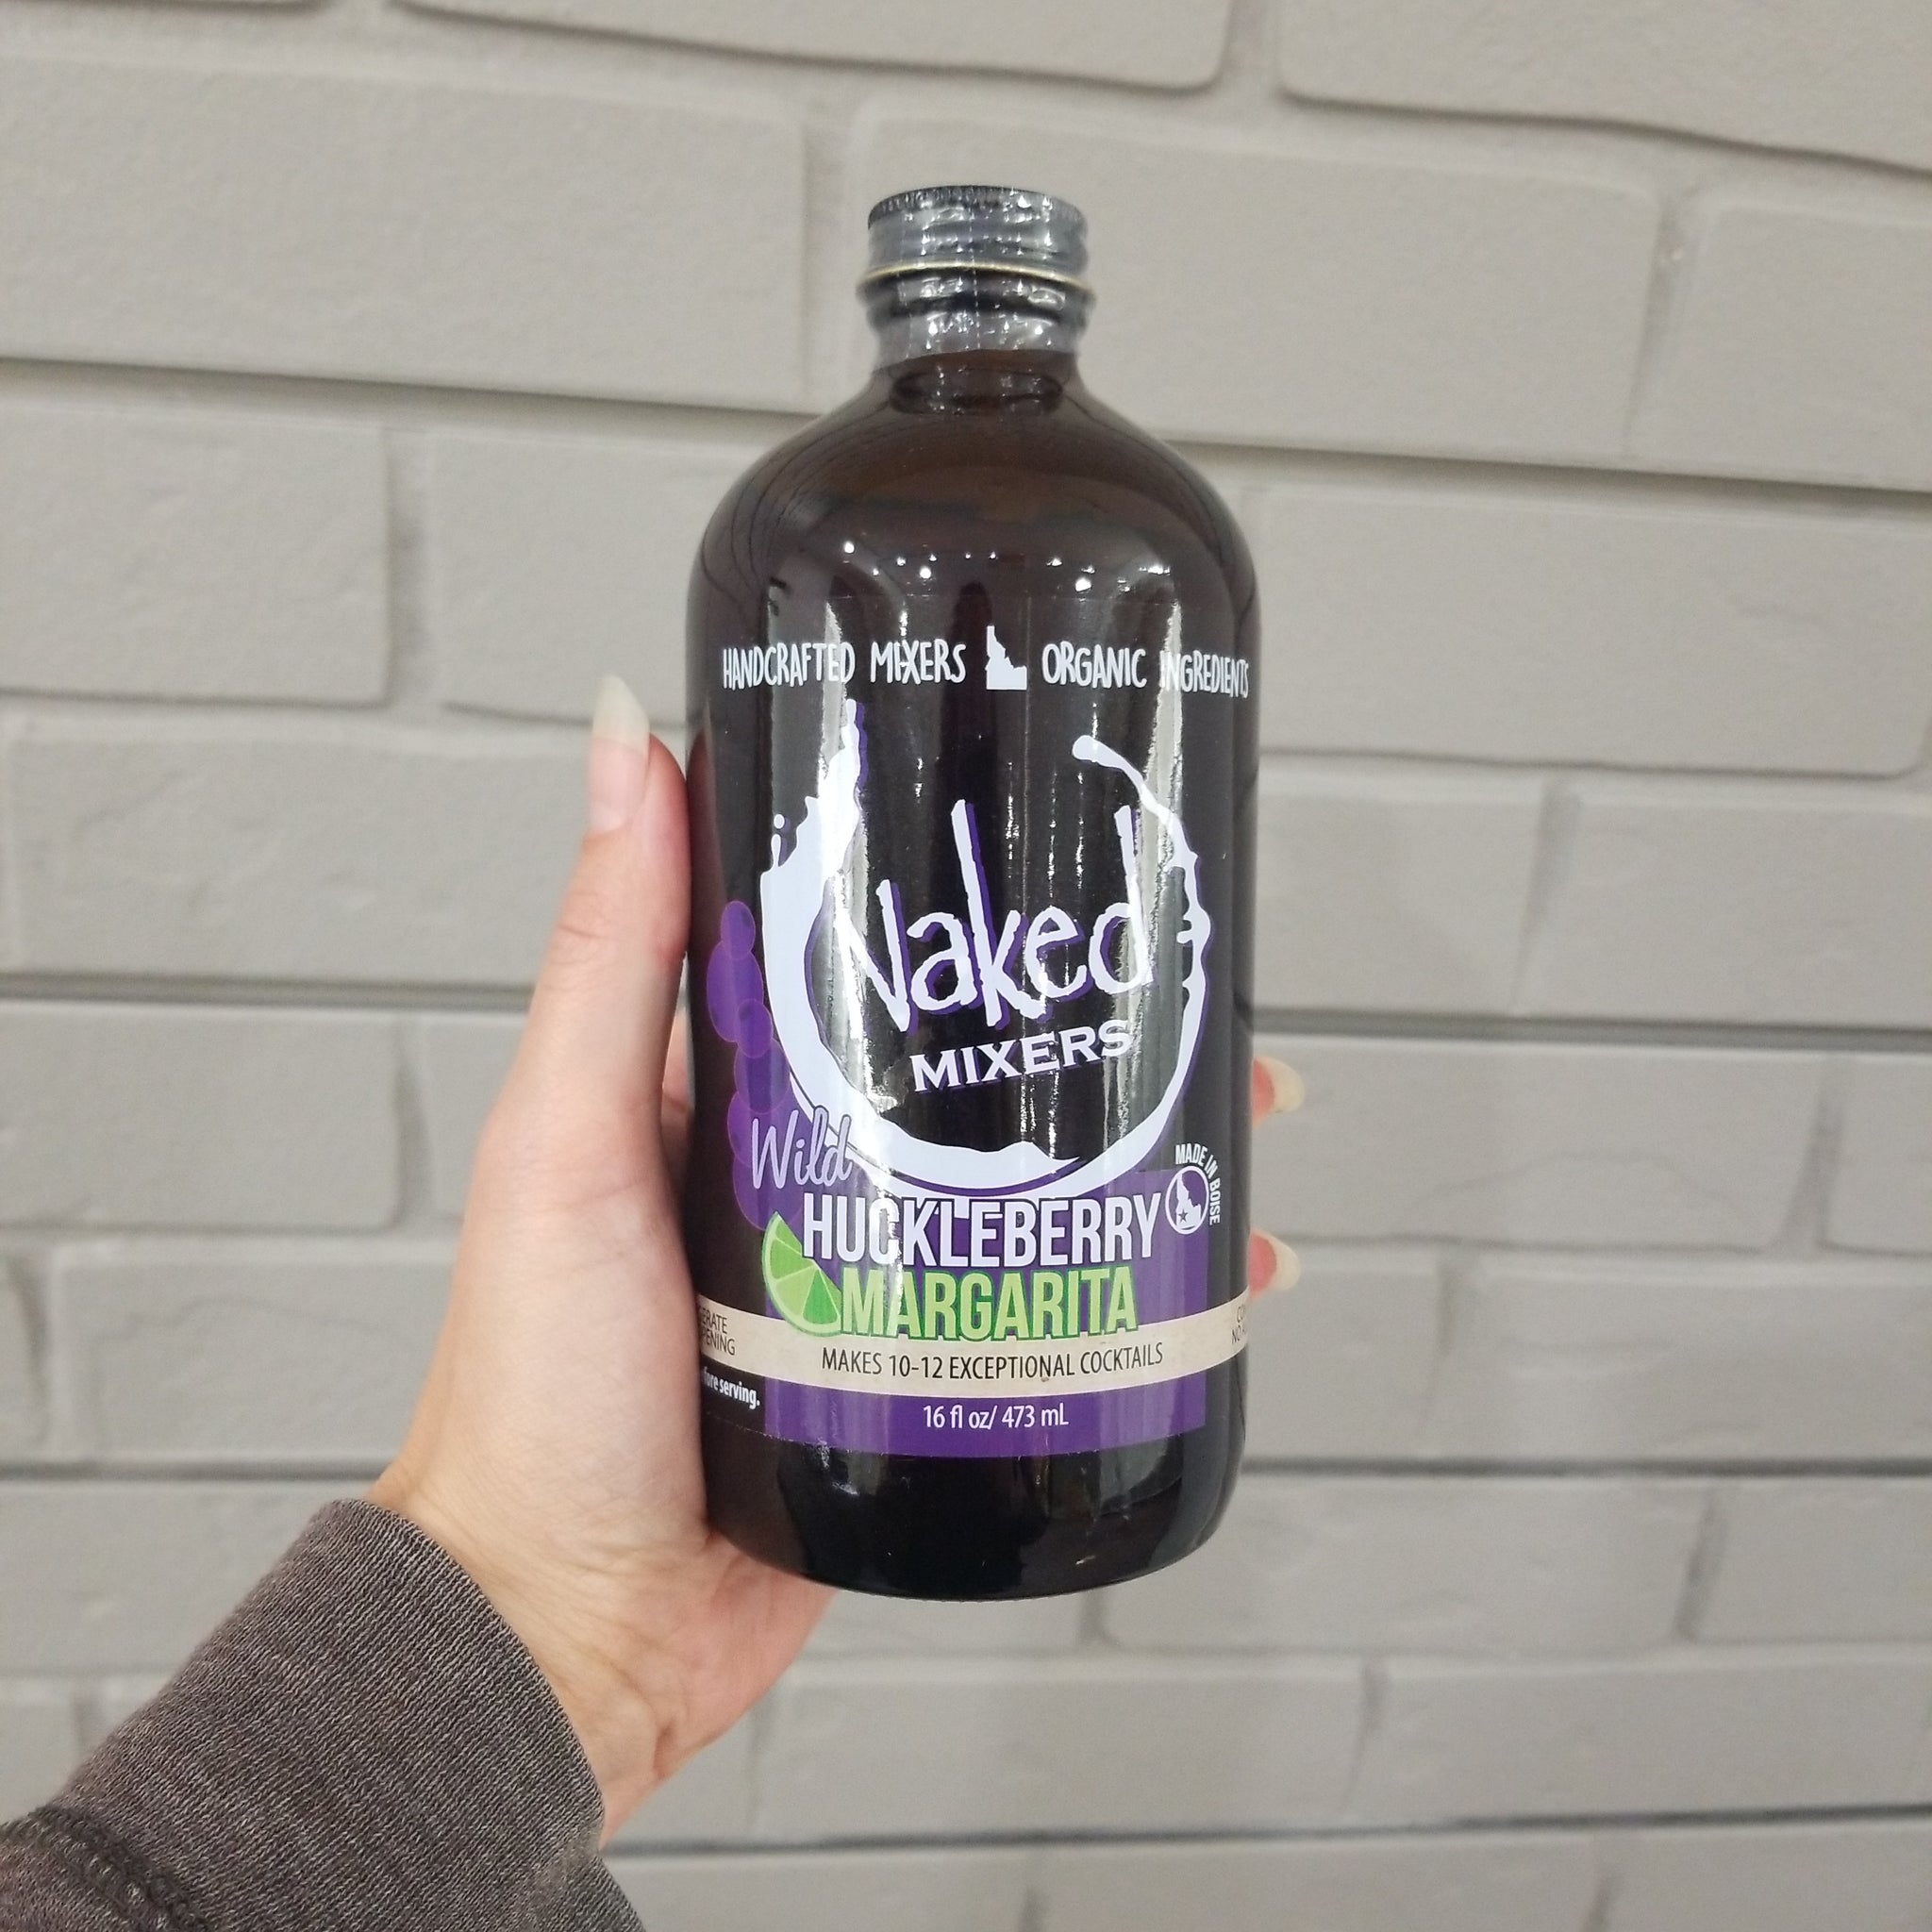 Naked Mixers Wild Huckleberry Margarita